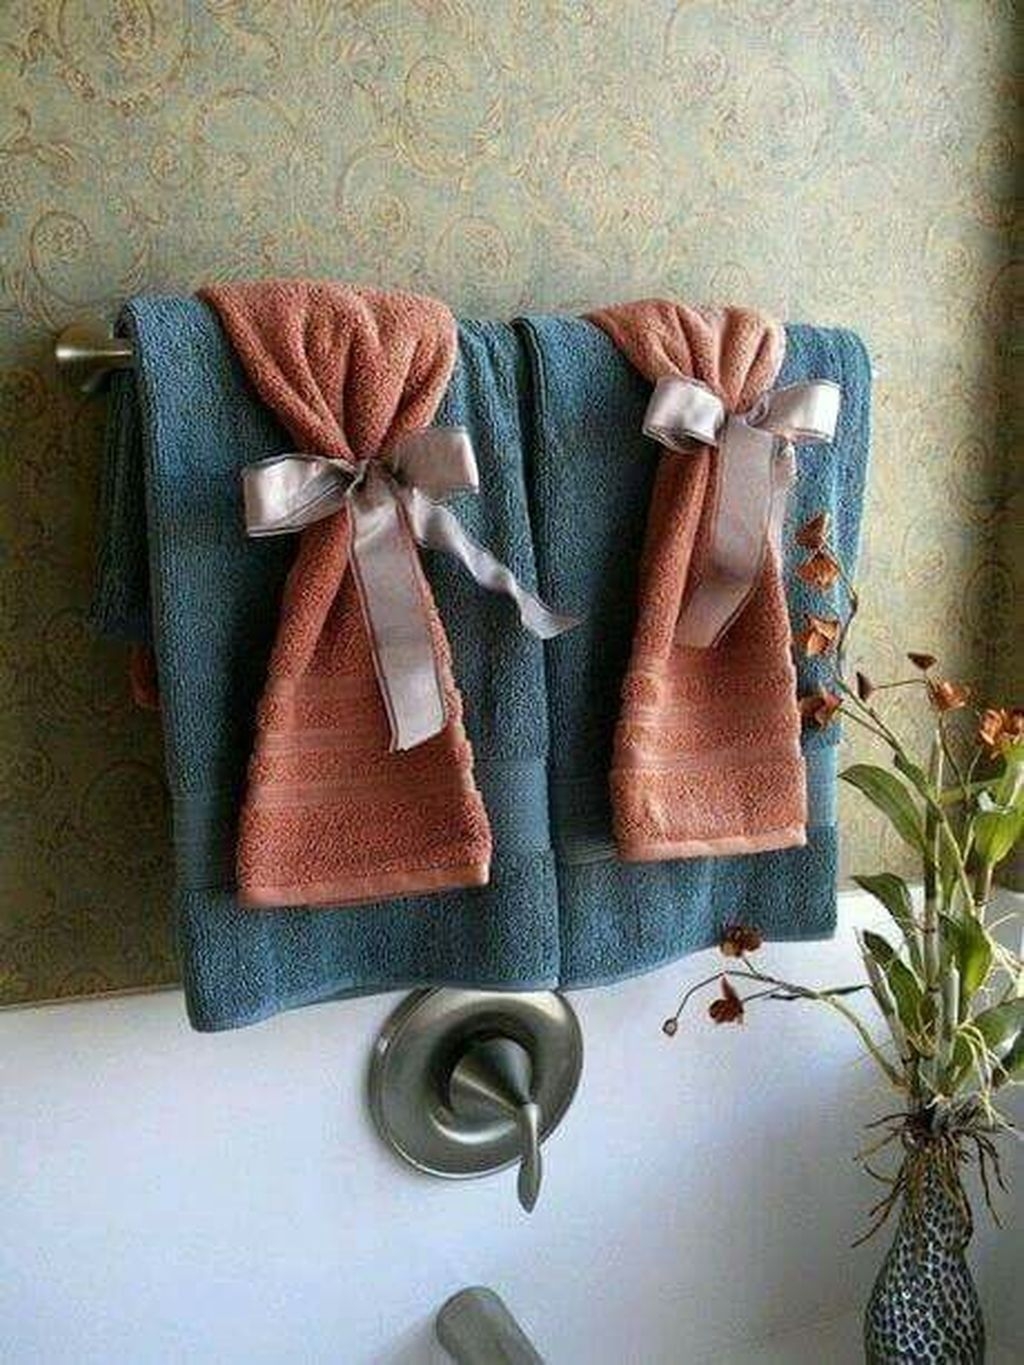 Affordable Towel Ideas For Best Bathroom Inspiration 49